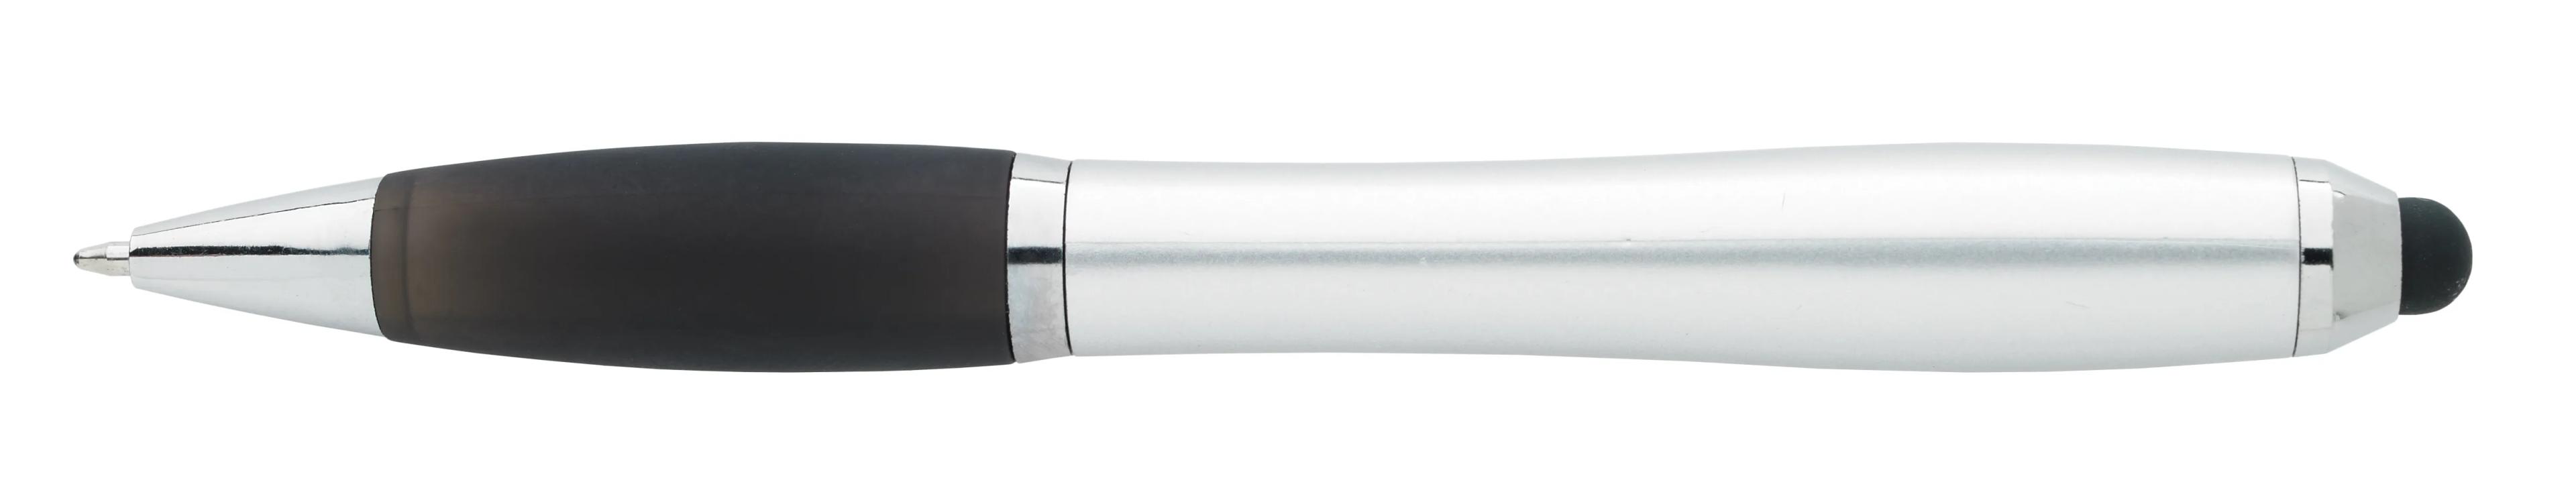 Ion Silver Stylus Pen 17 of 17